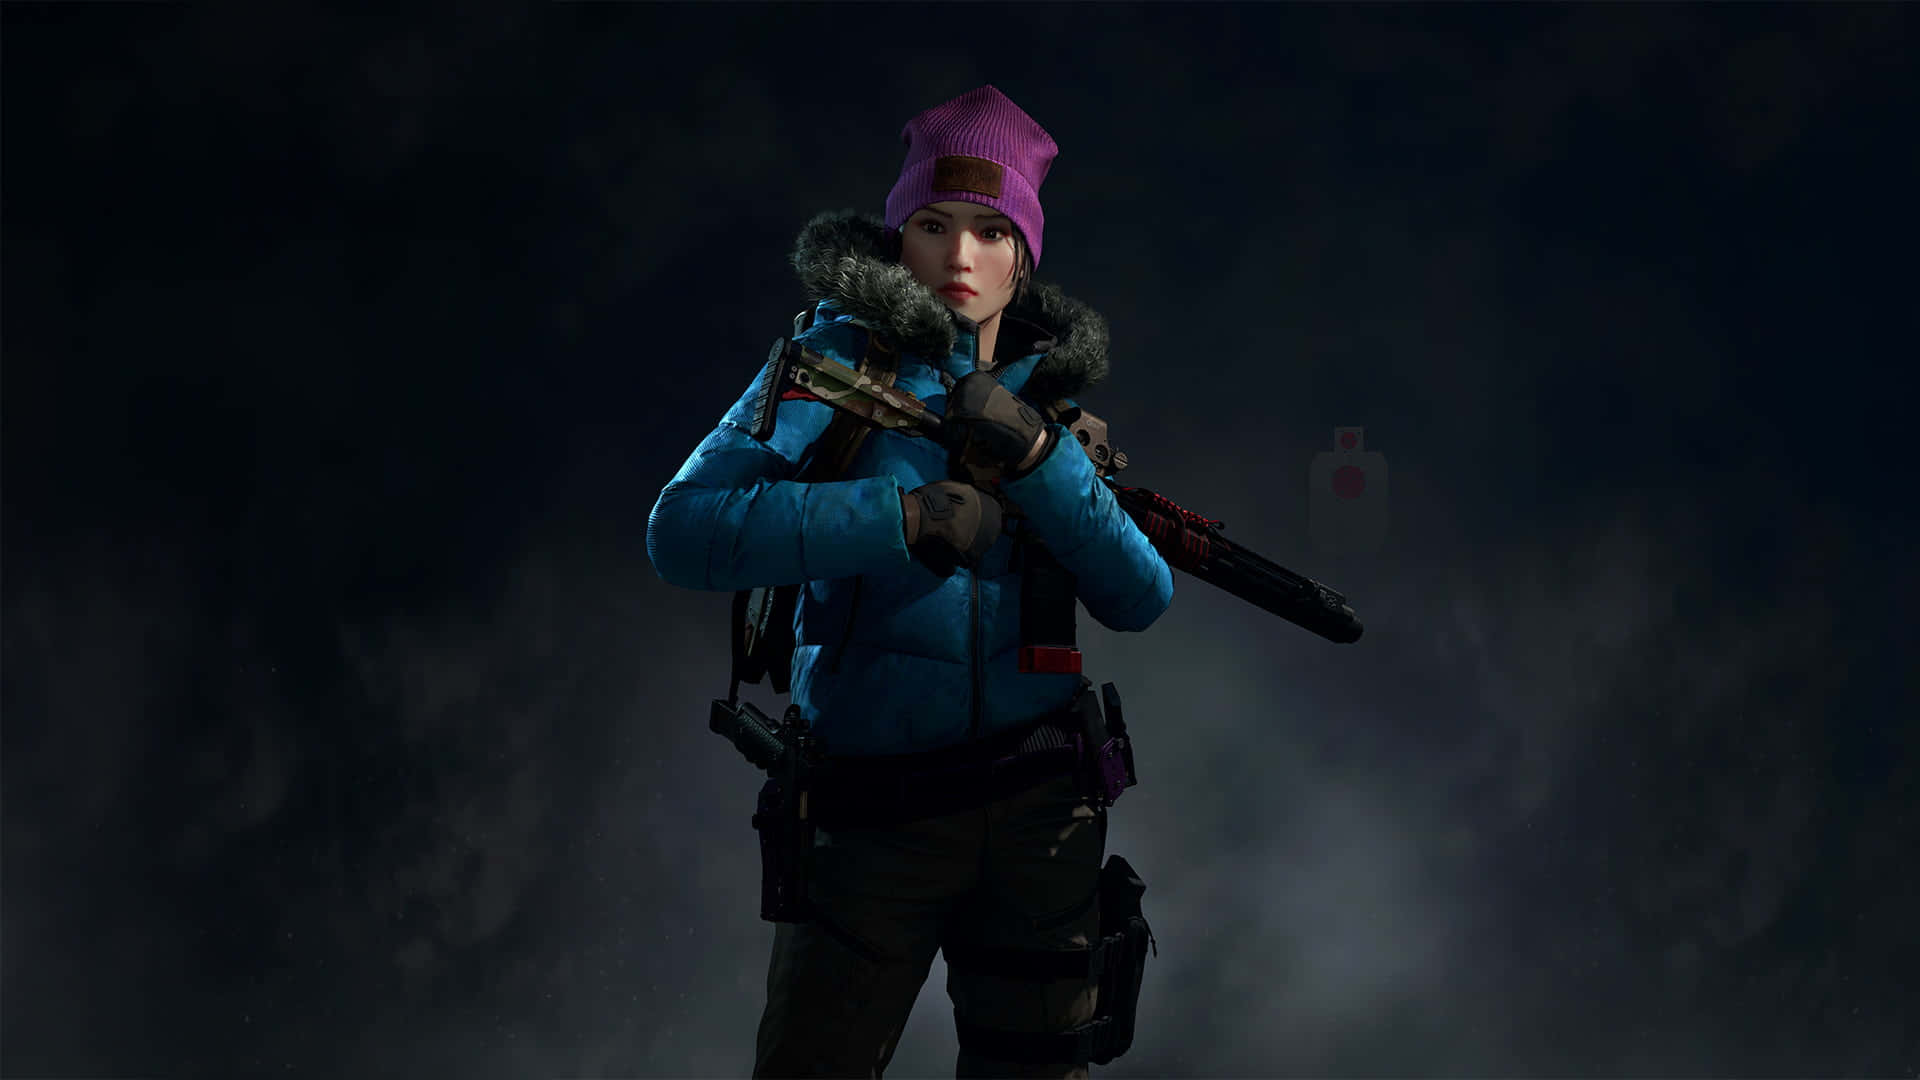 A Woman In A Blue Jacket Holding A Gun